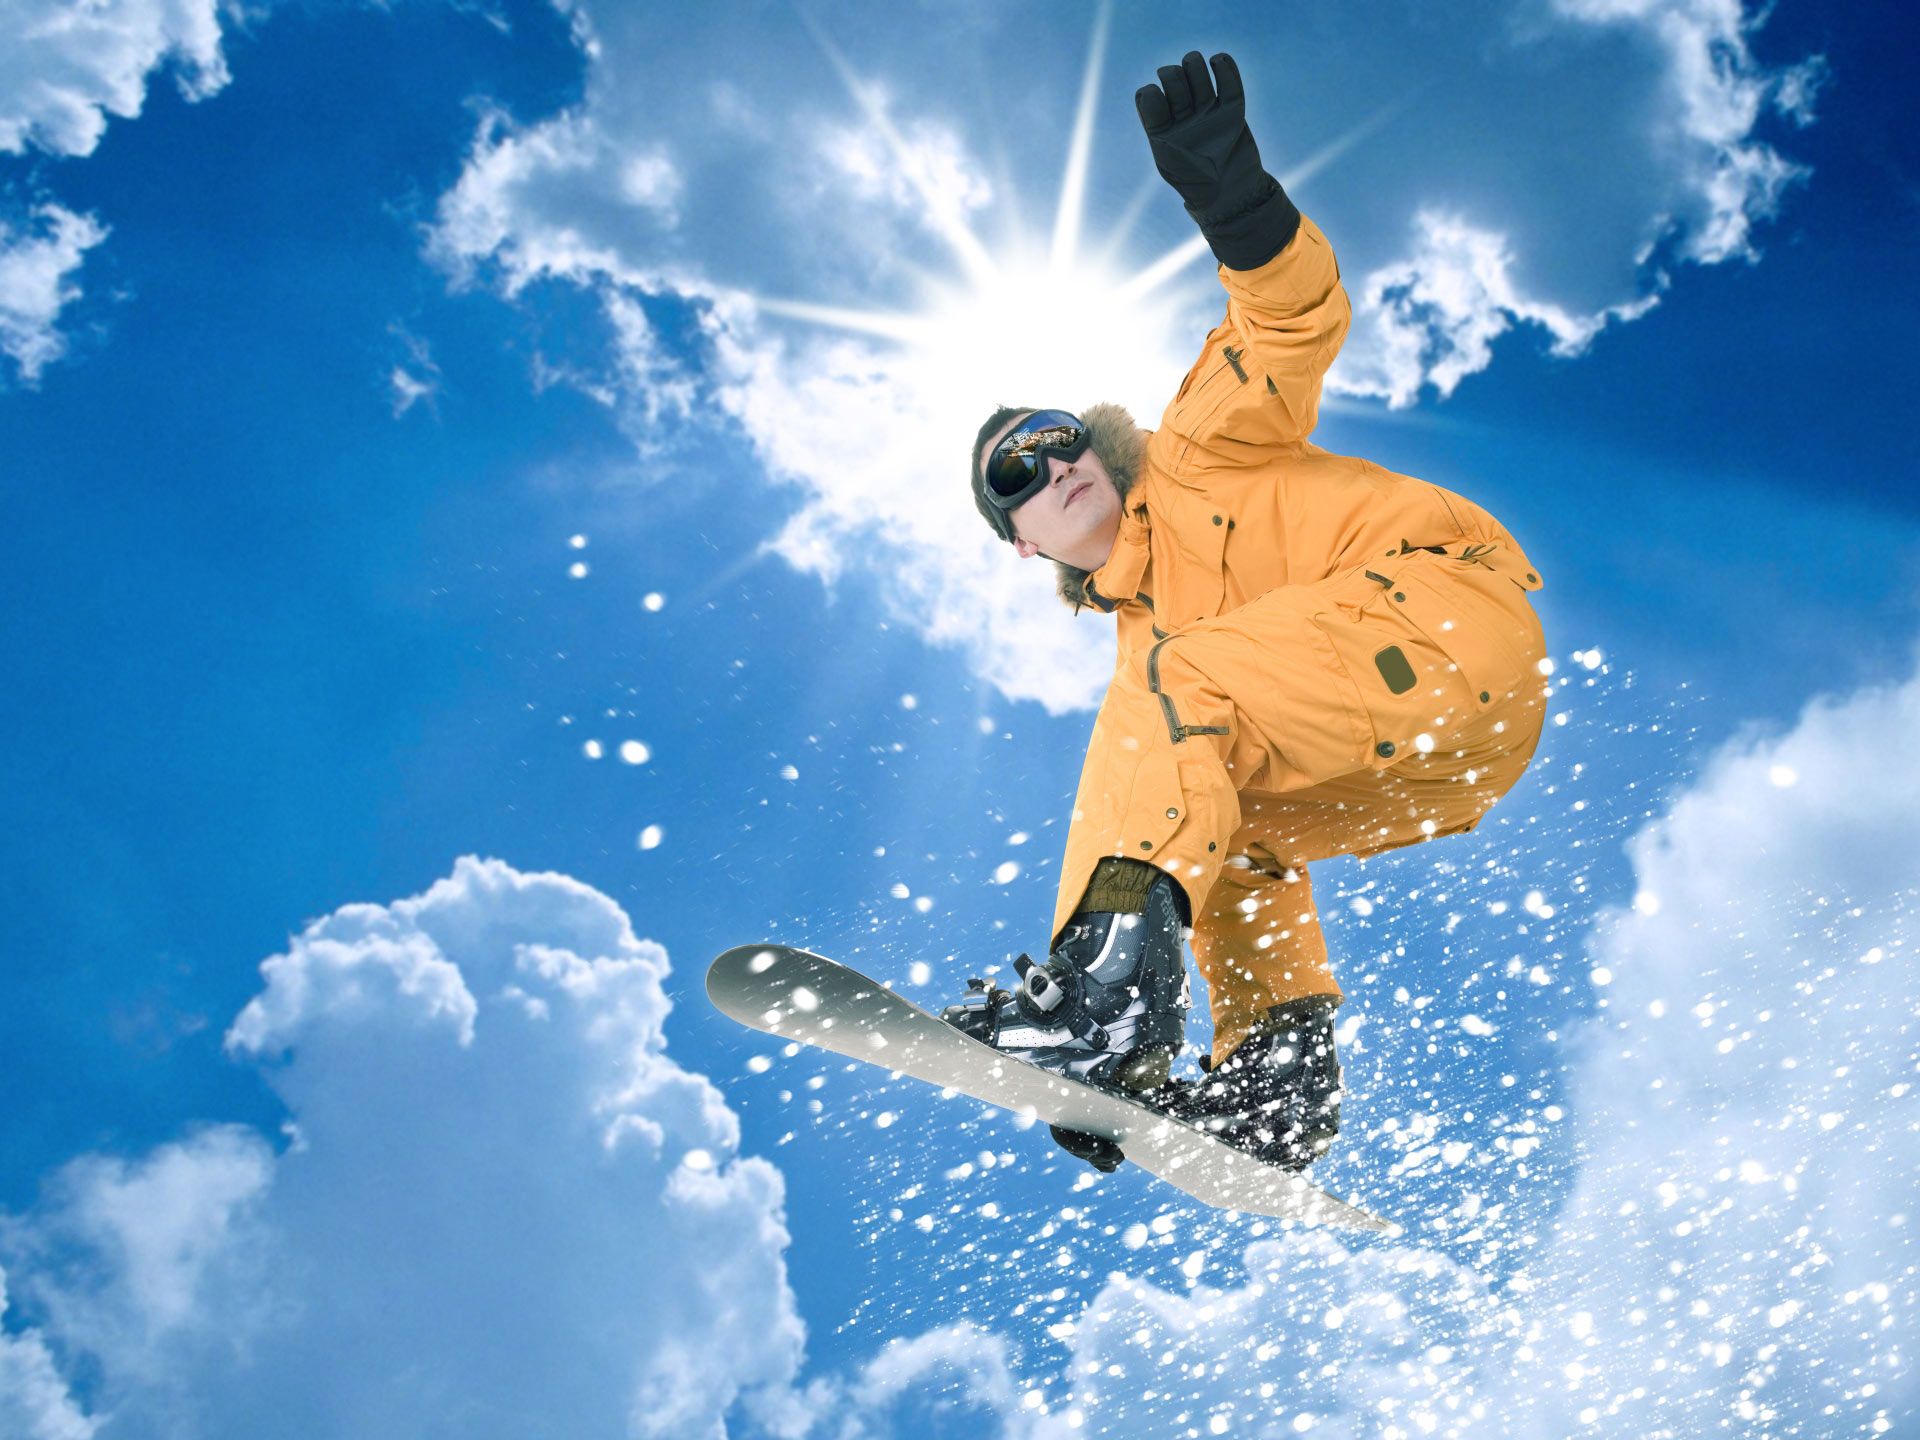 Desktop Wallpaper · Gallery · Windows 7 · Freestyle skiing | Free ...